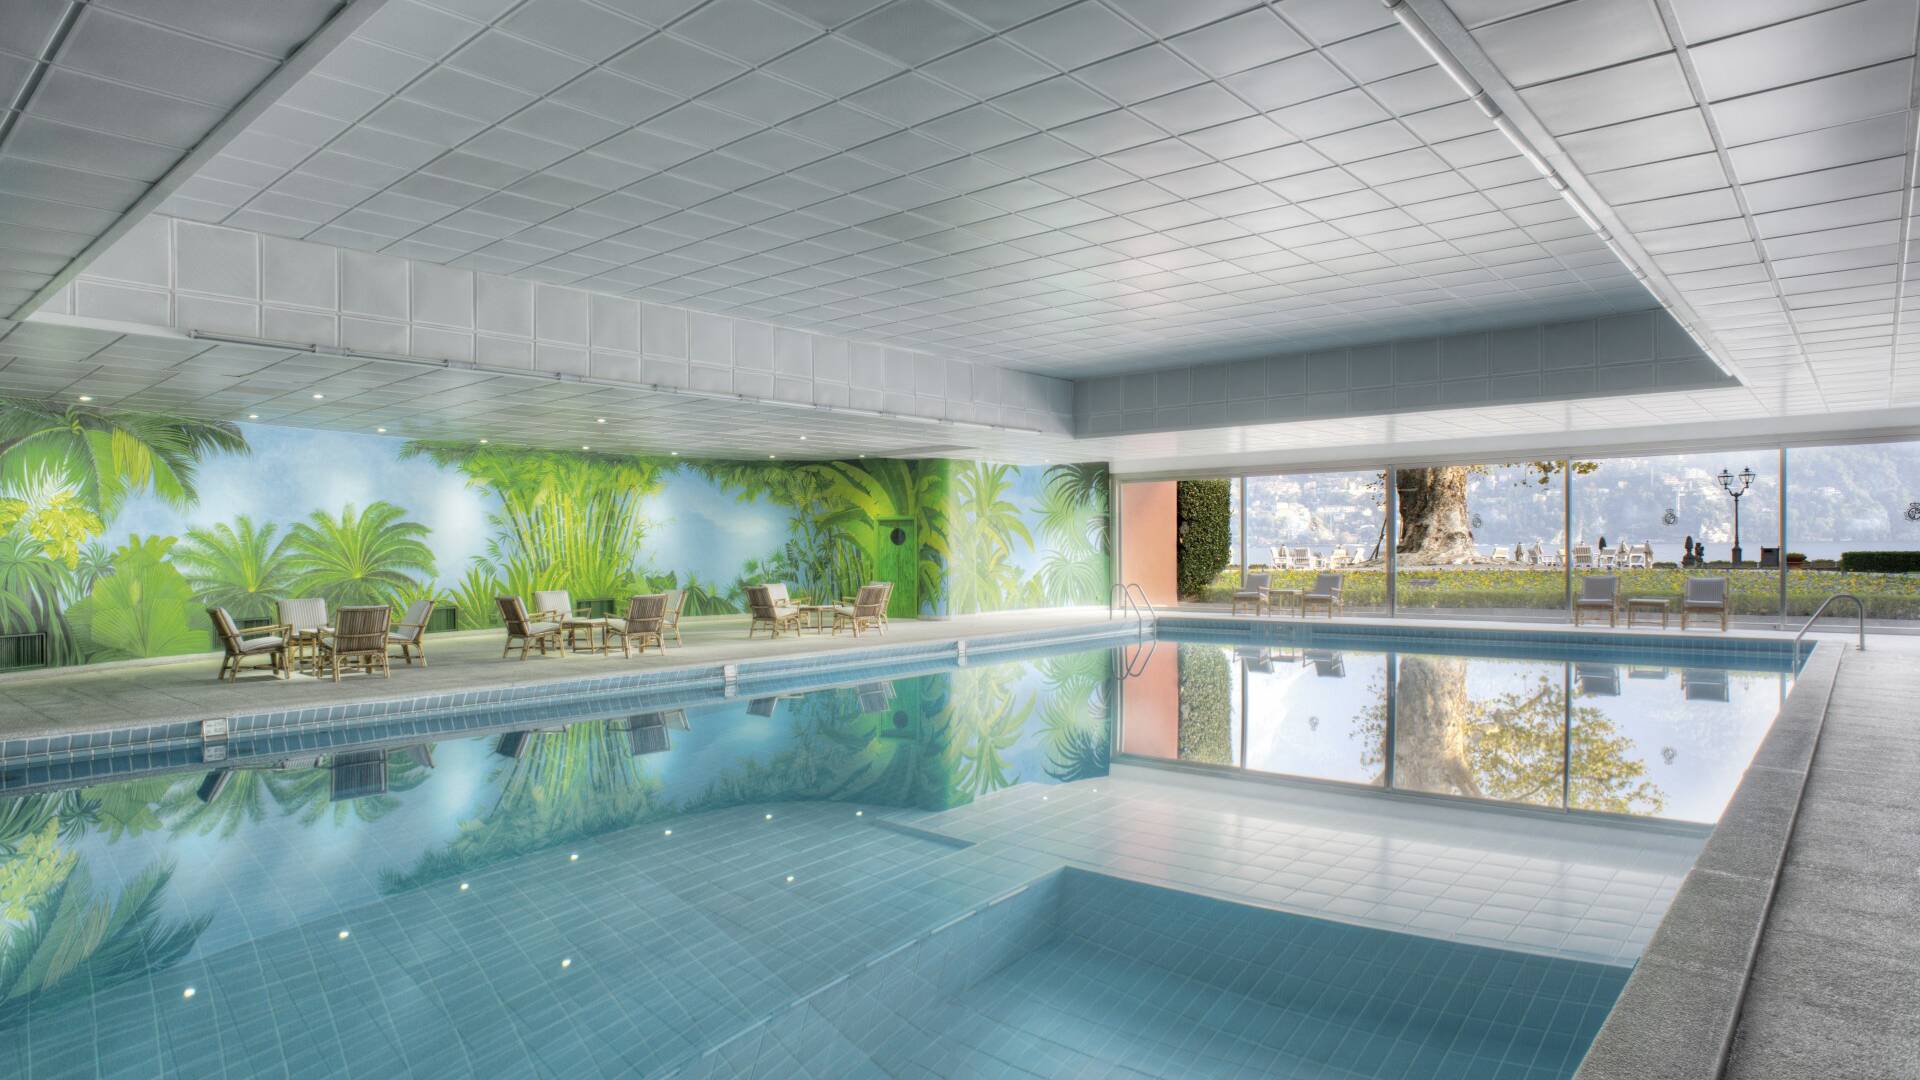 Villa d'Este, hotel, internal swimming pool